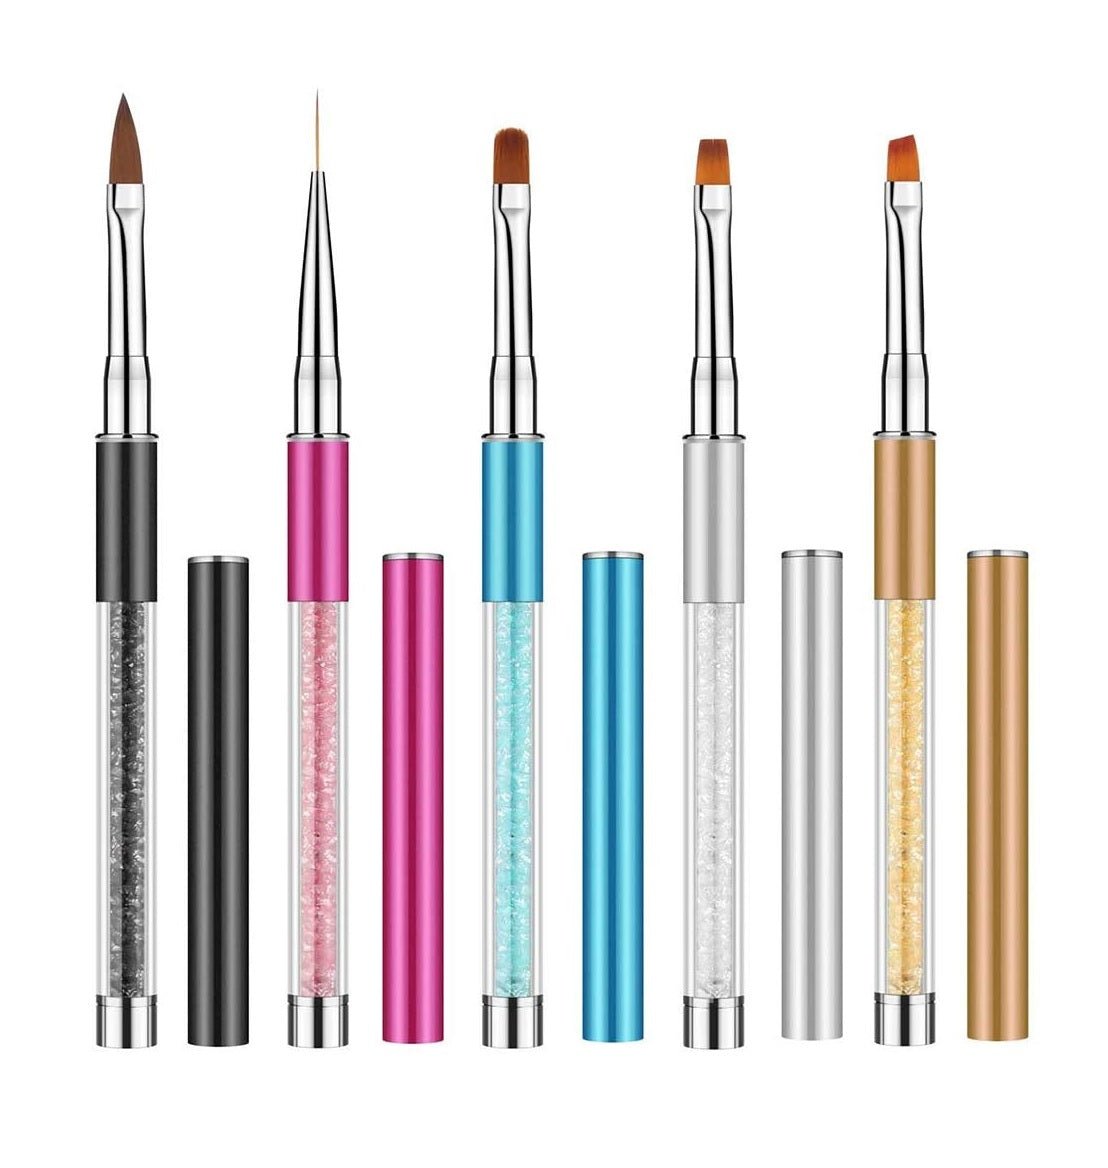 5 PCS UV Gel Nailart Pens Nail Brushes- Royalkart - The Urban Store